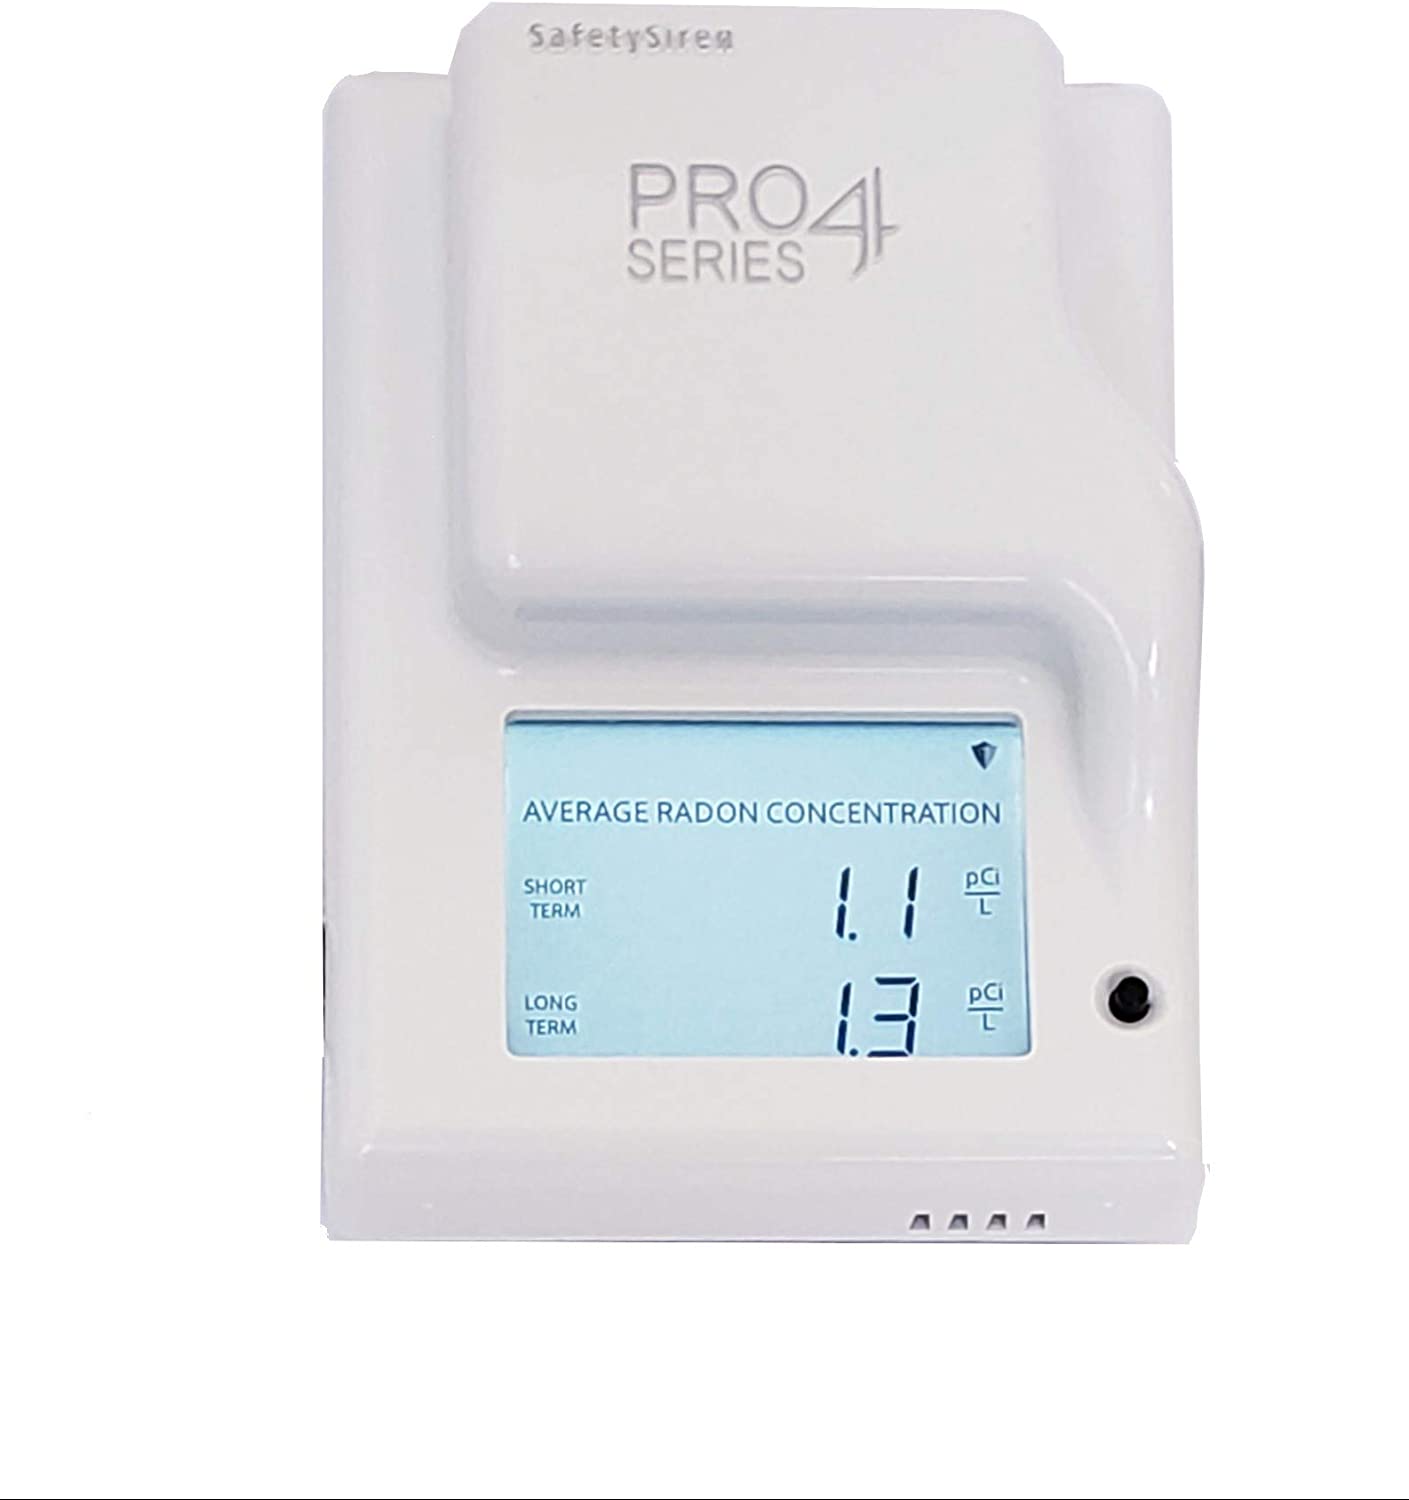 SafetySiren Pro4 Continuous Monitoring Radon Detector